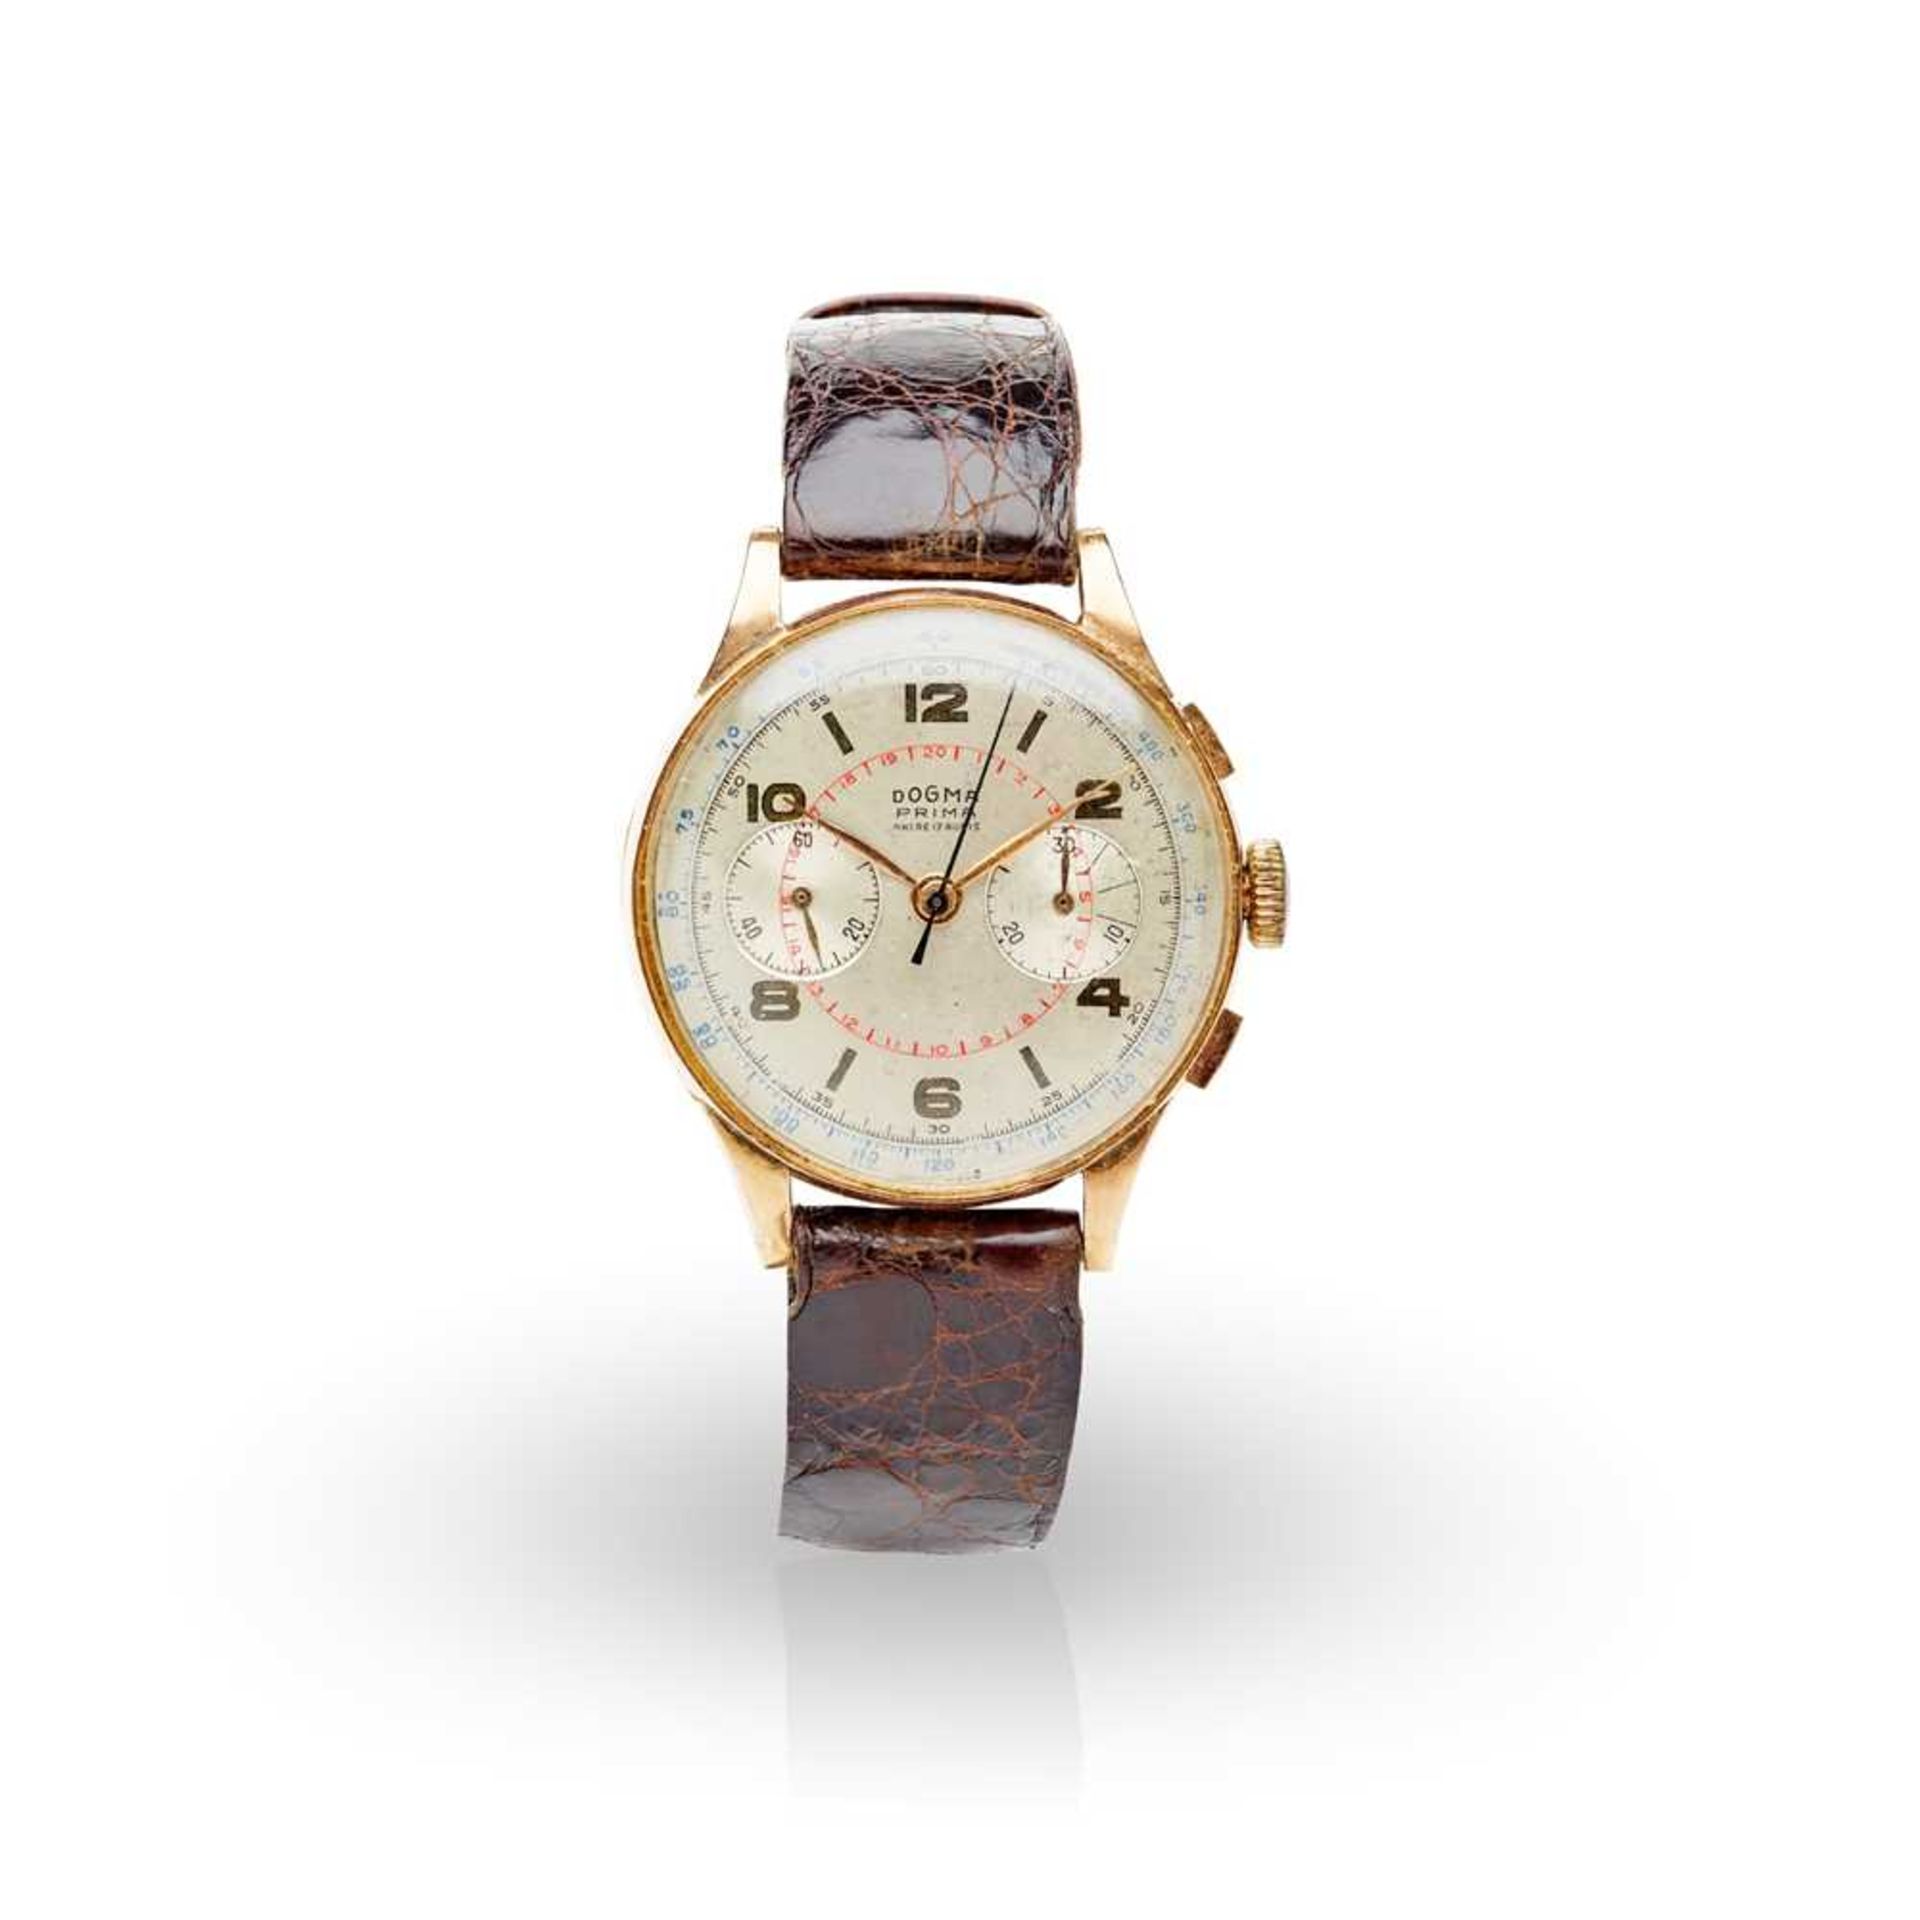 Dogma: a mid-century wrist watch